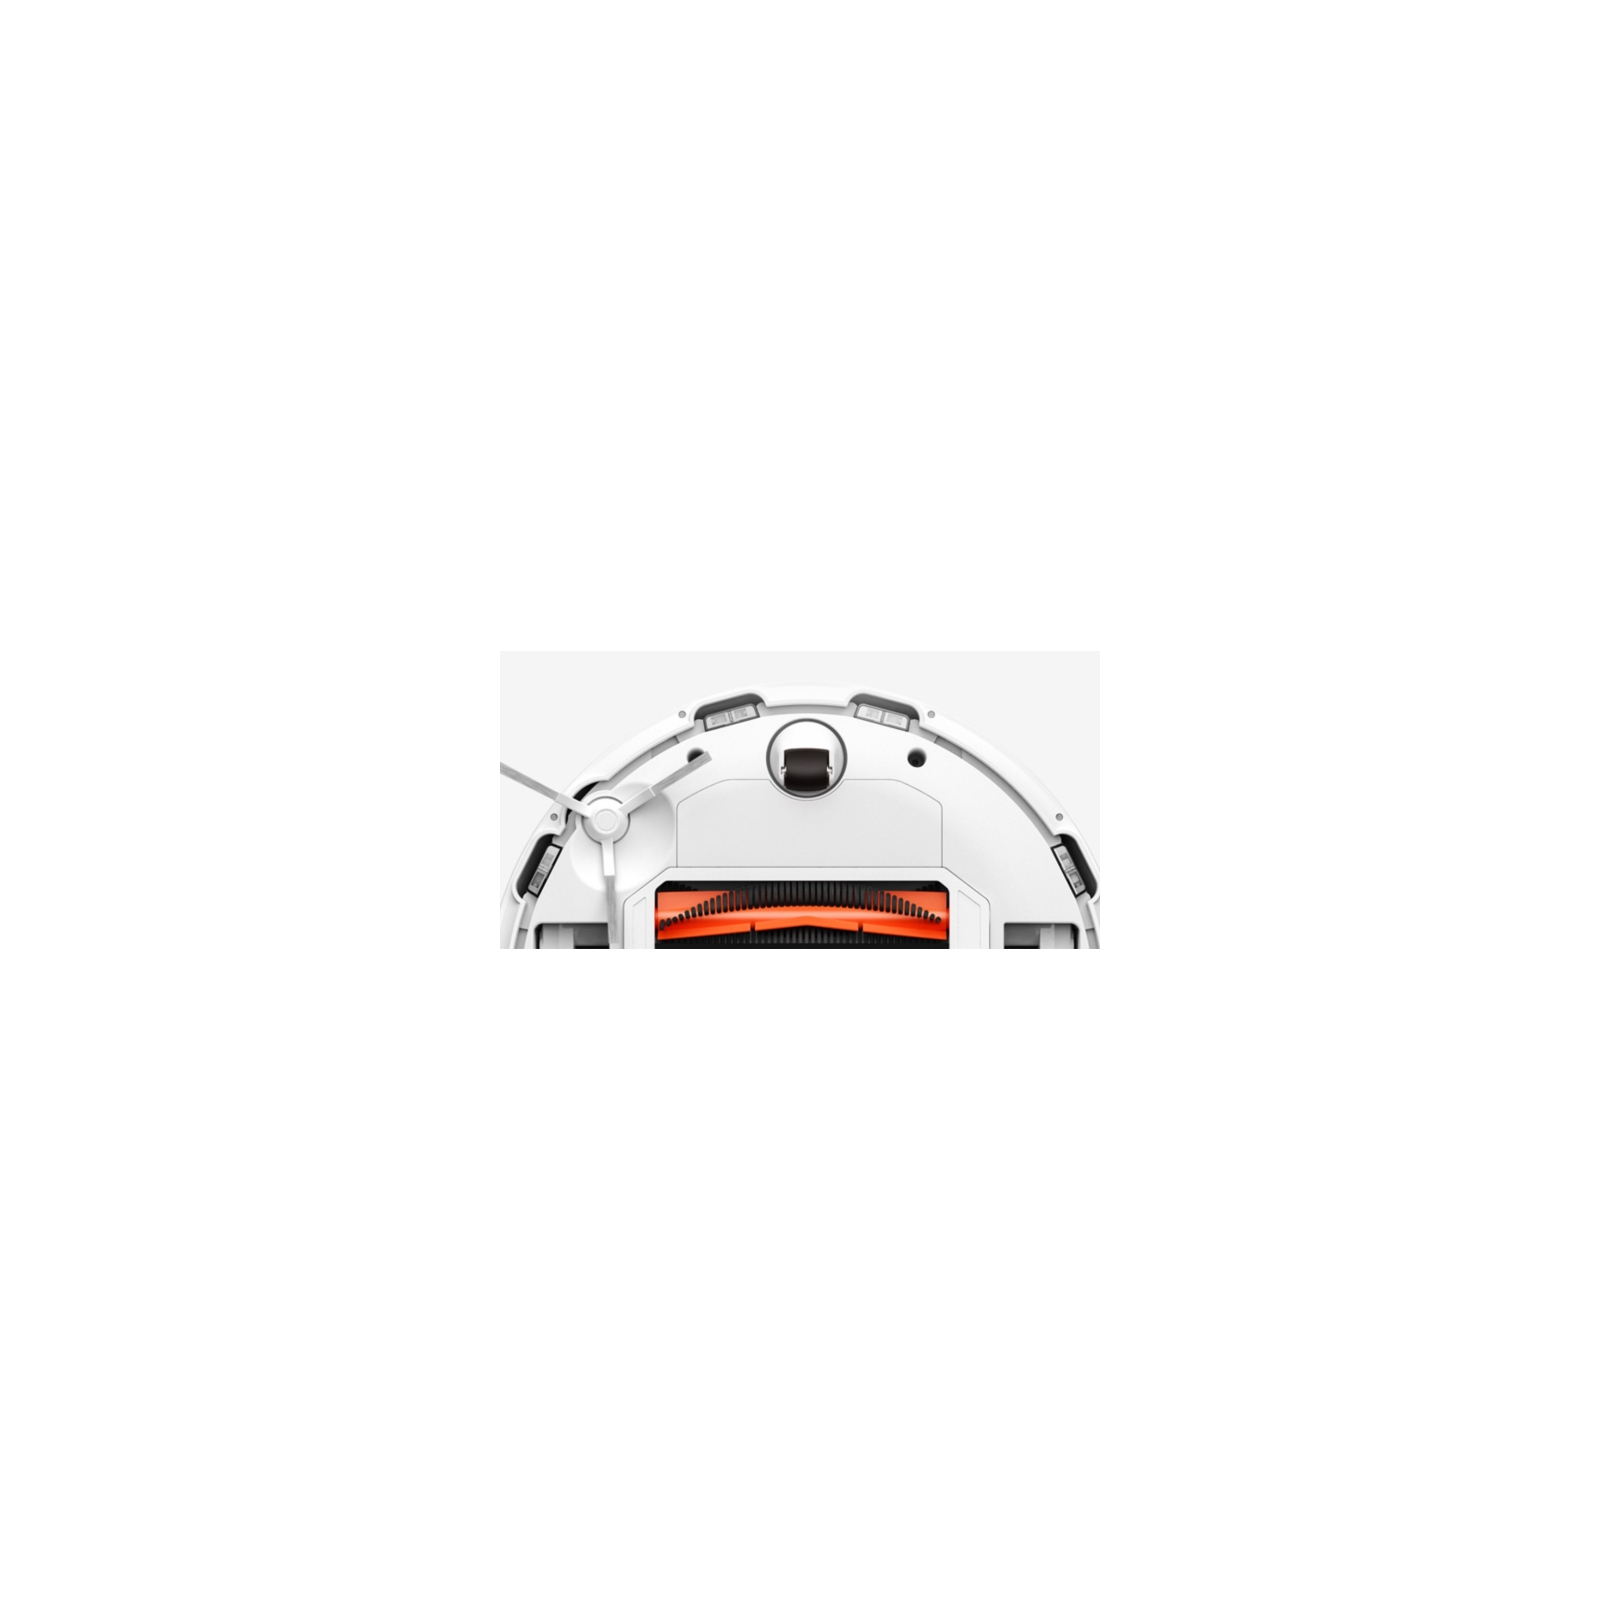 Пылесос Xiaomi Mi Robot Vacuum Cleaner white (STYJ02YM) изображение 4